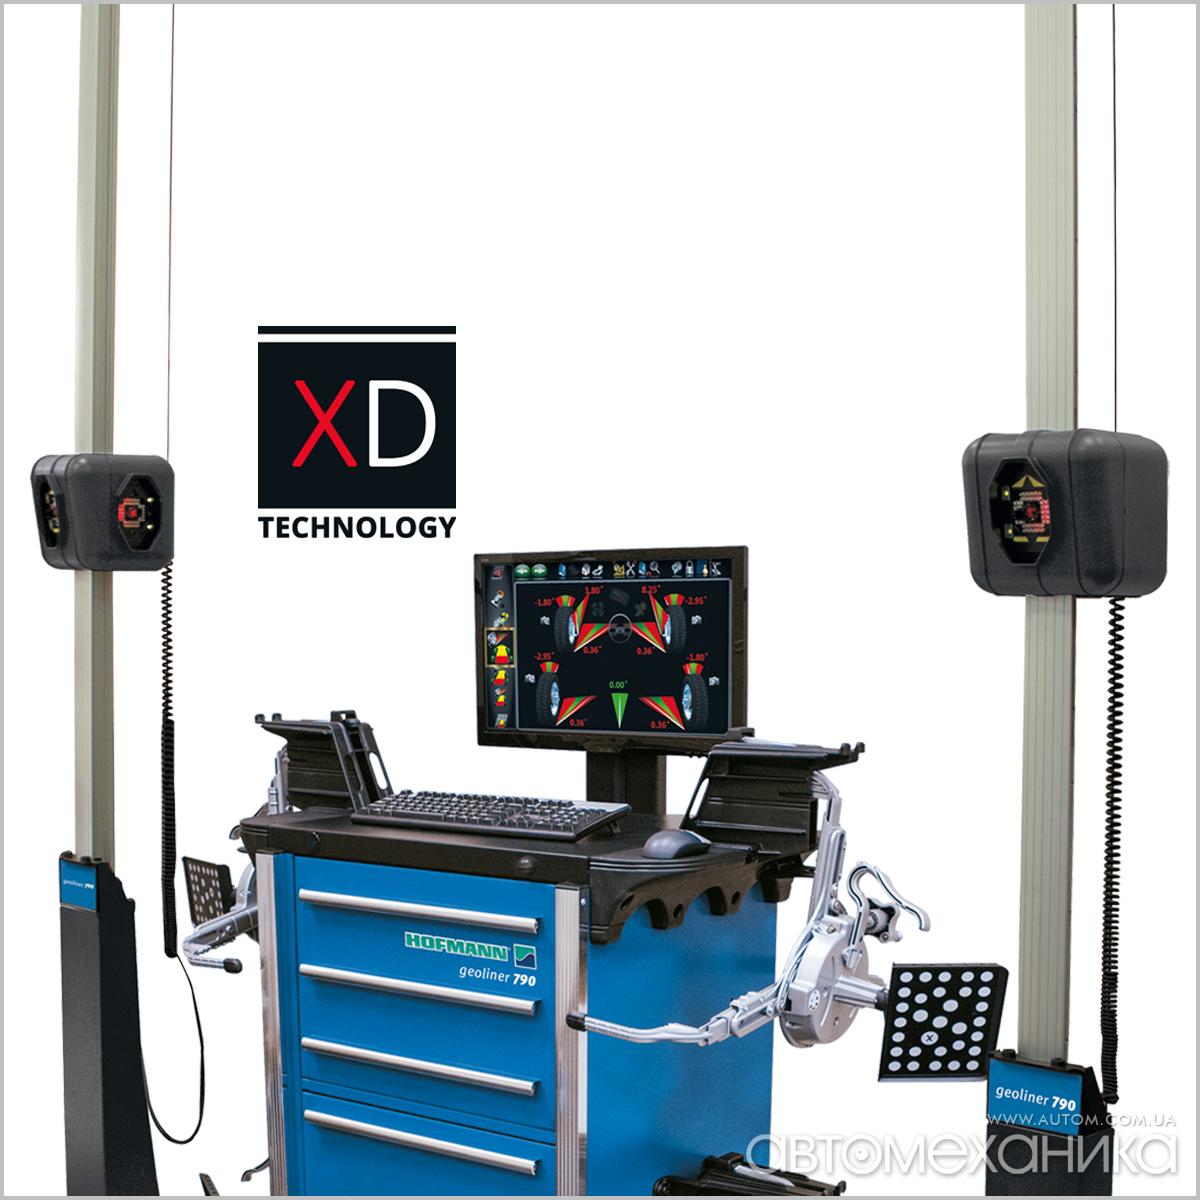 Стенд XD с 2 стойками и 3 самонаводящимися камерами с синхронизацией положения